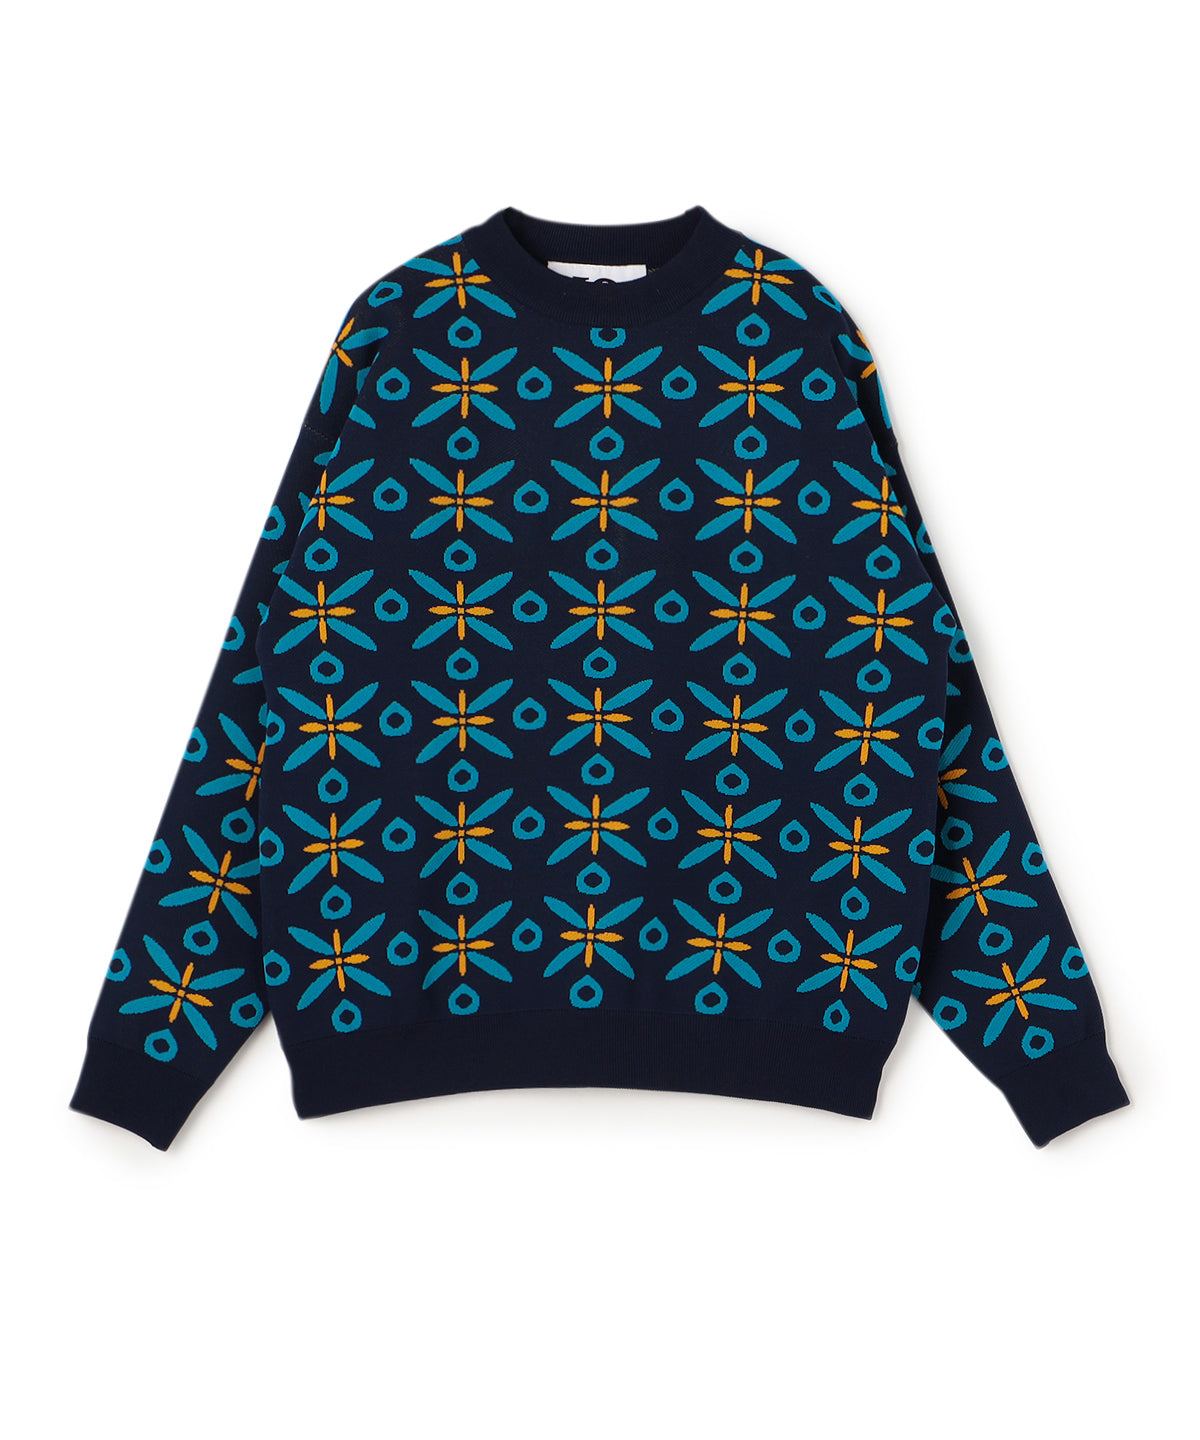 usedTHREE FACE Star knit Sweater ネイビー